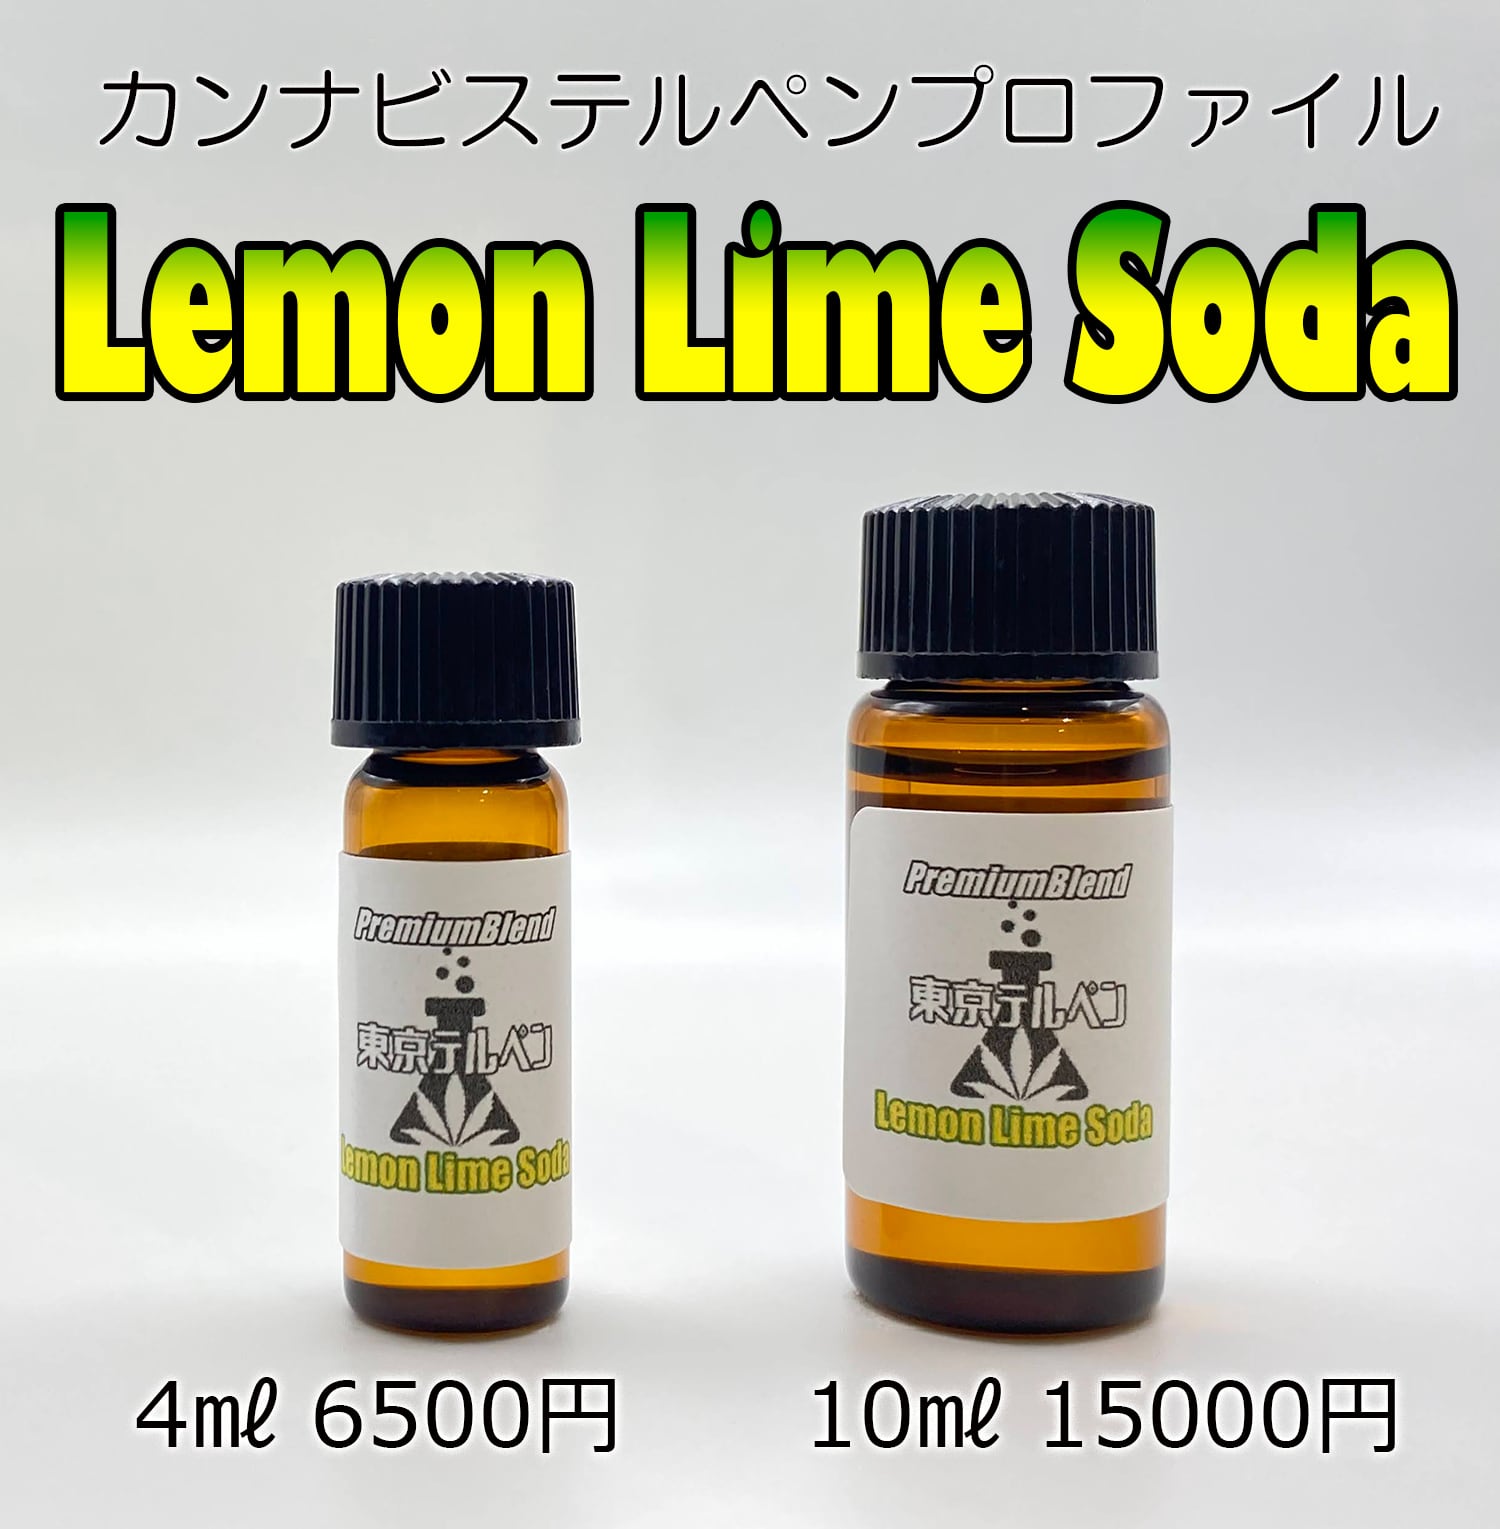 LemonLimeSoda カンナビステルペンプロファイル プレミアムブレンド 4ml